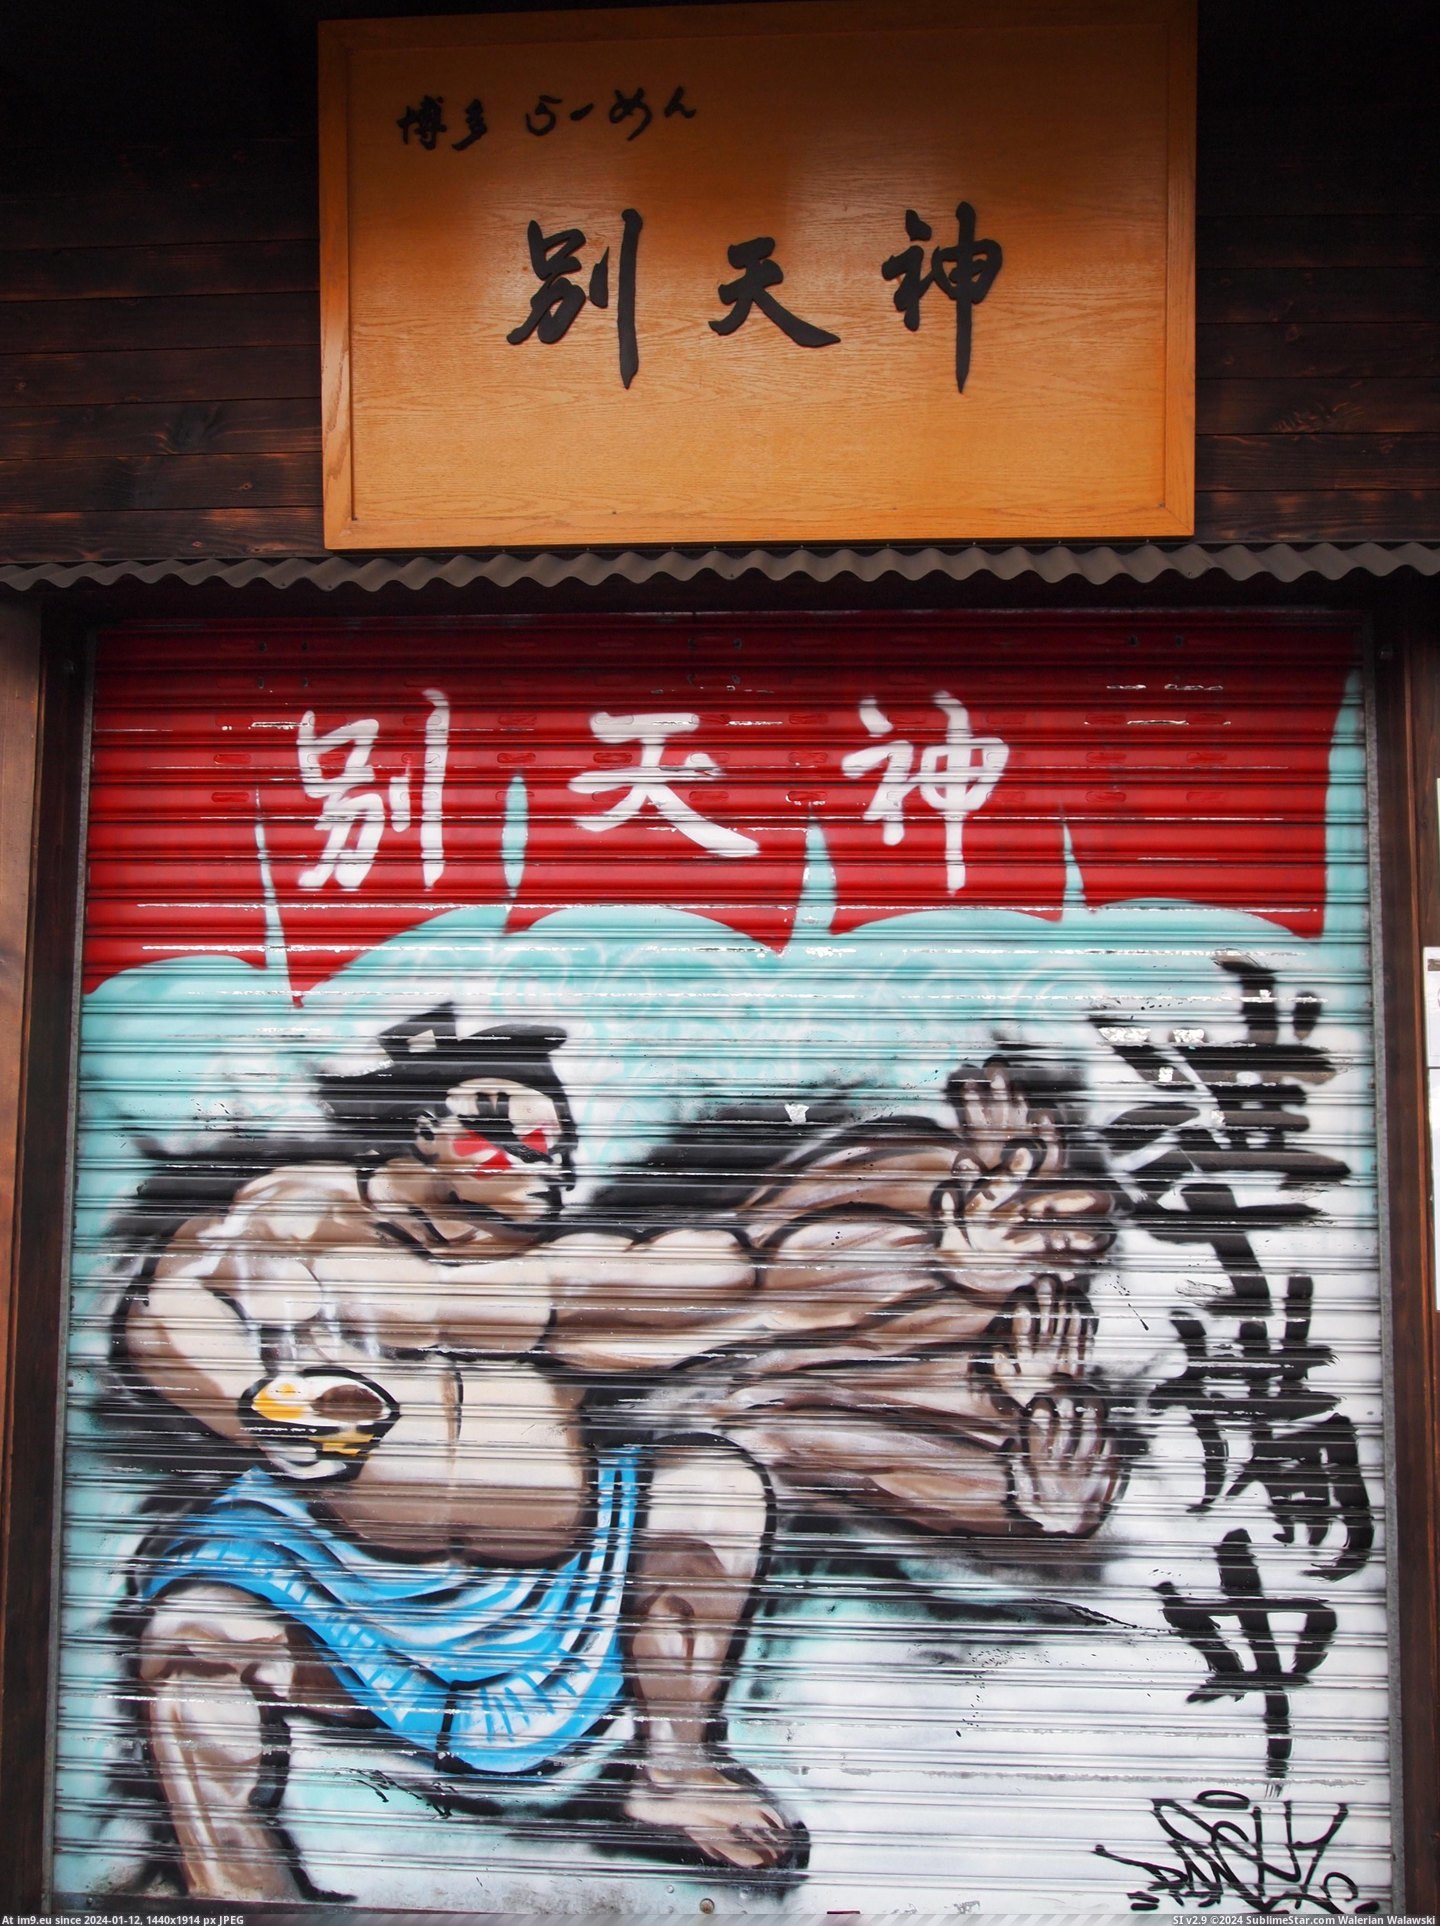 #Gaming #Art #Fighter #Hong #Kong #Street #Graffiti [Gaming] Street Fighter graffiti art in Hong Kong Pic. (Изображение из альбом My r/GAMING favs))